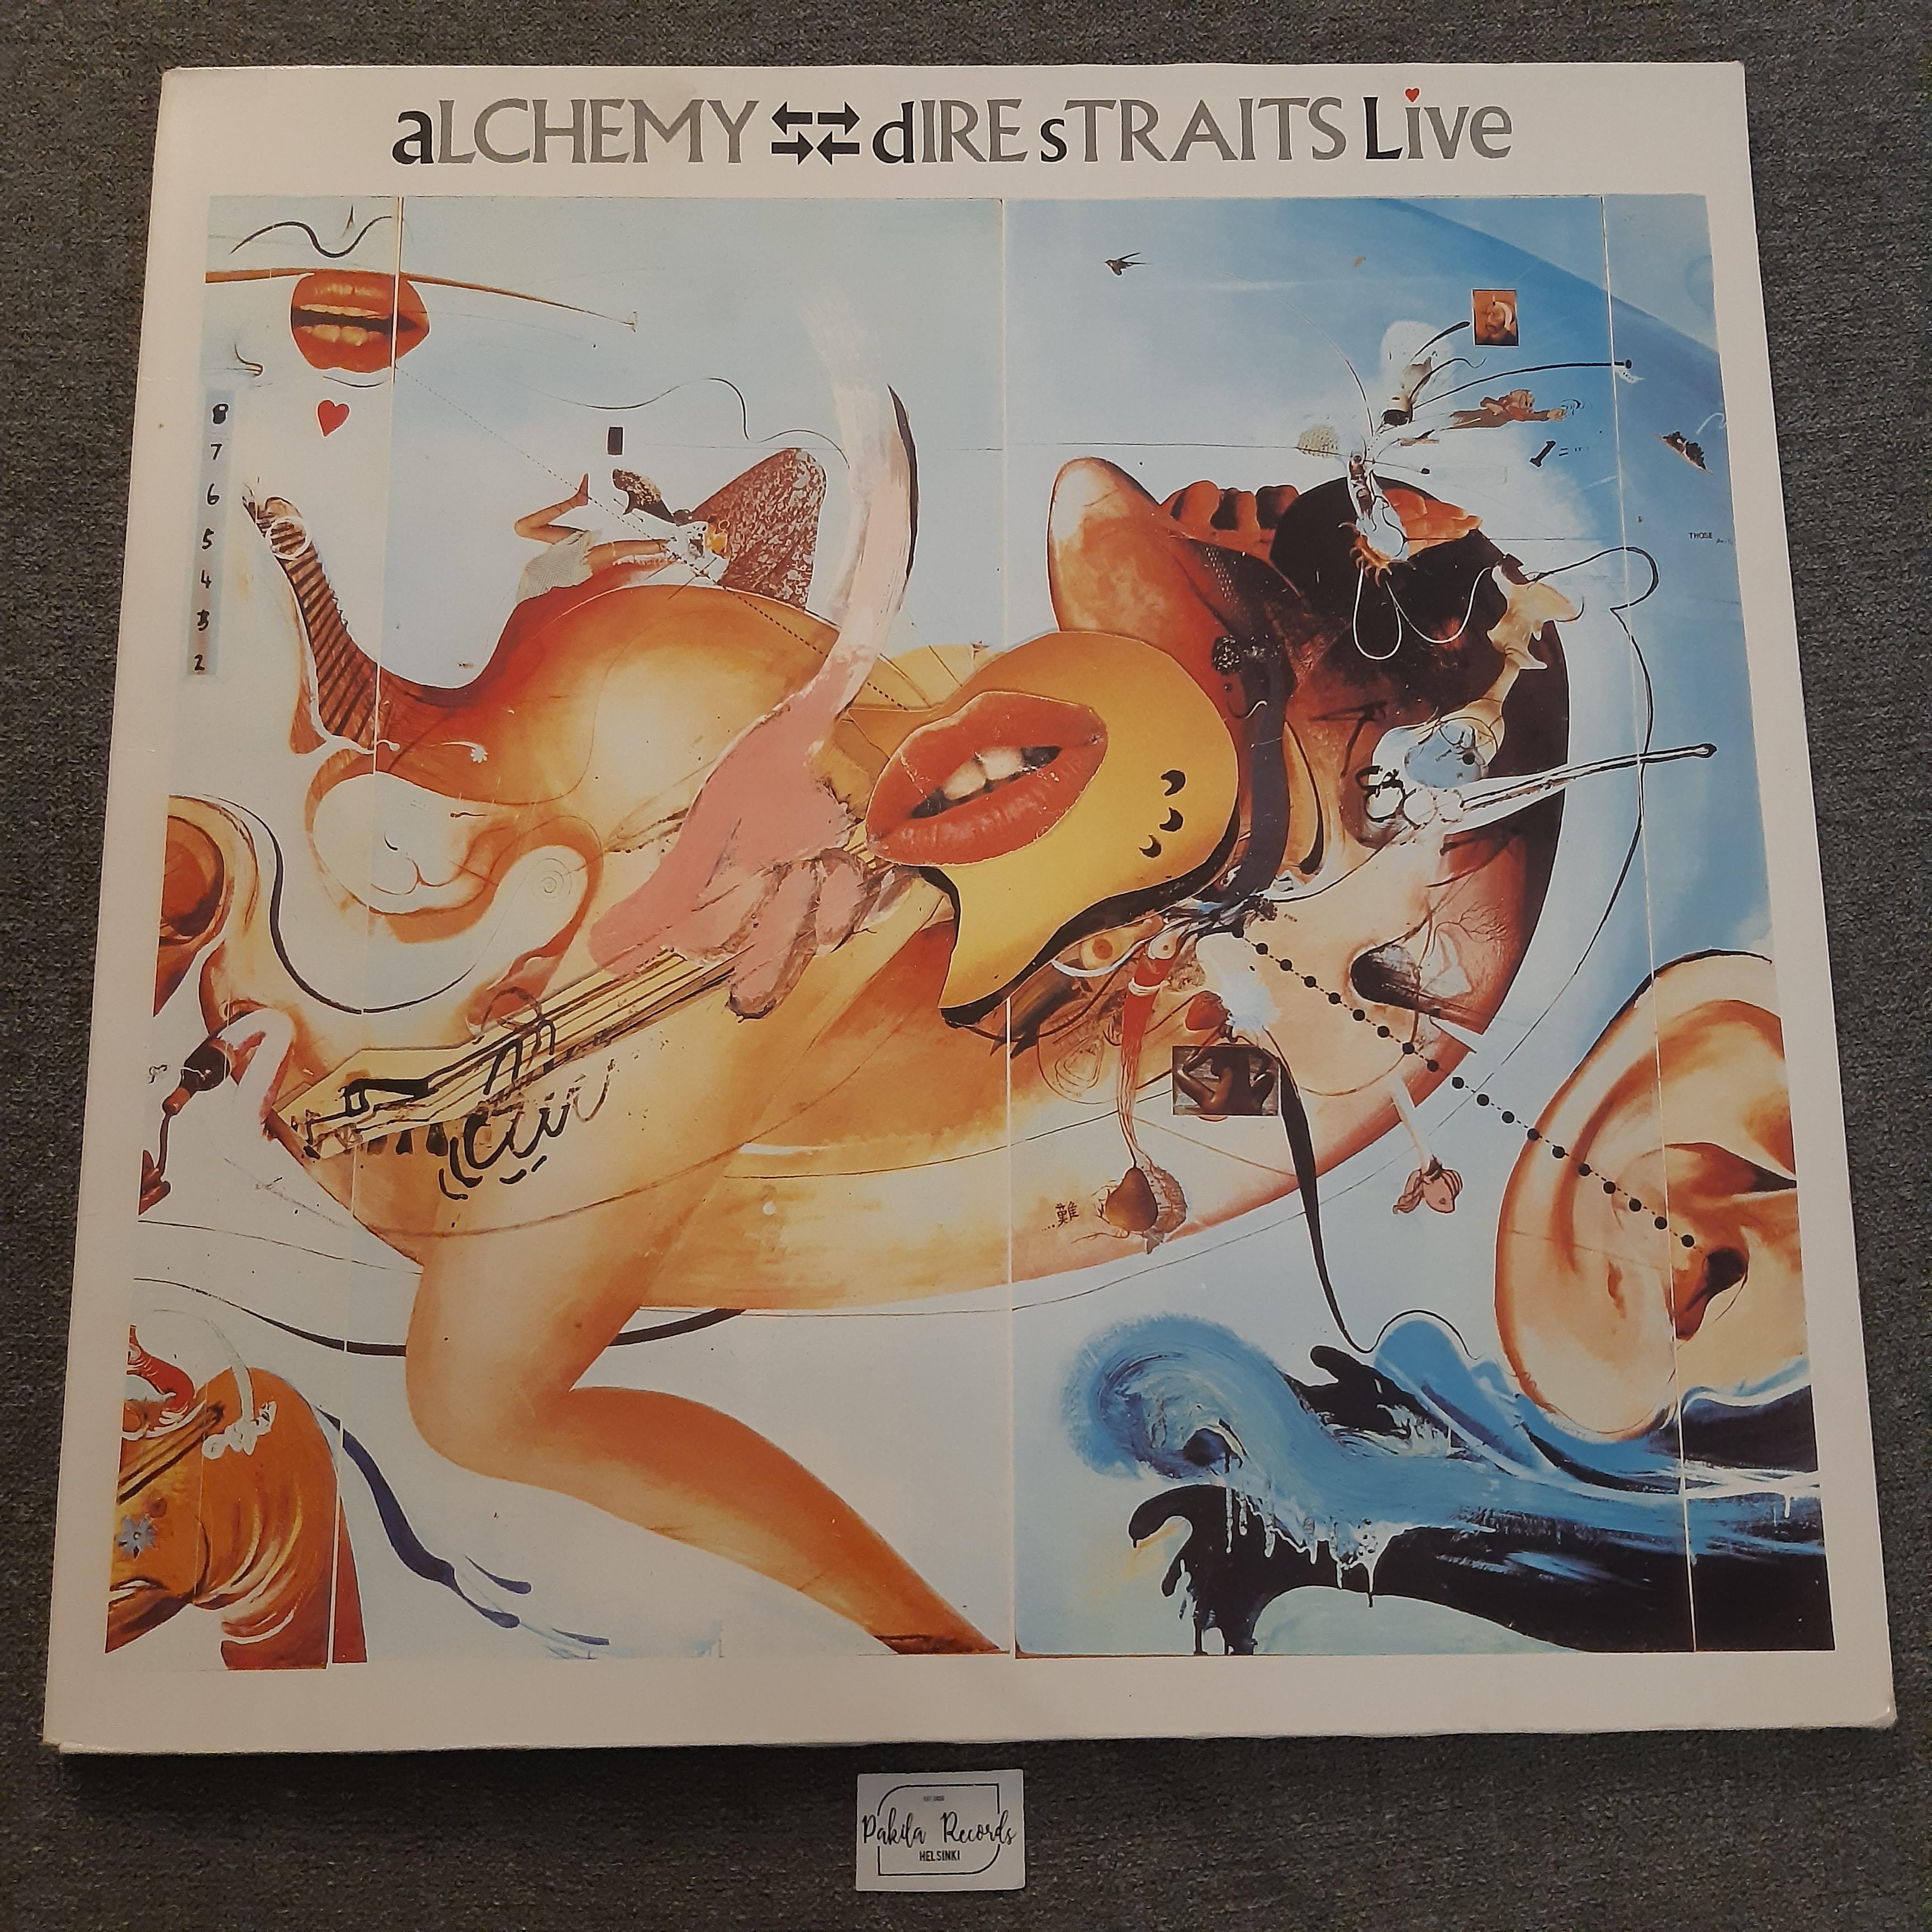 Dire Straits - Alchemy, Dire Straits Live - 2 LP (käytetty)